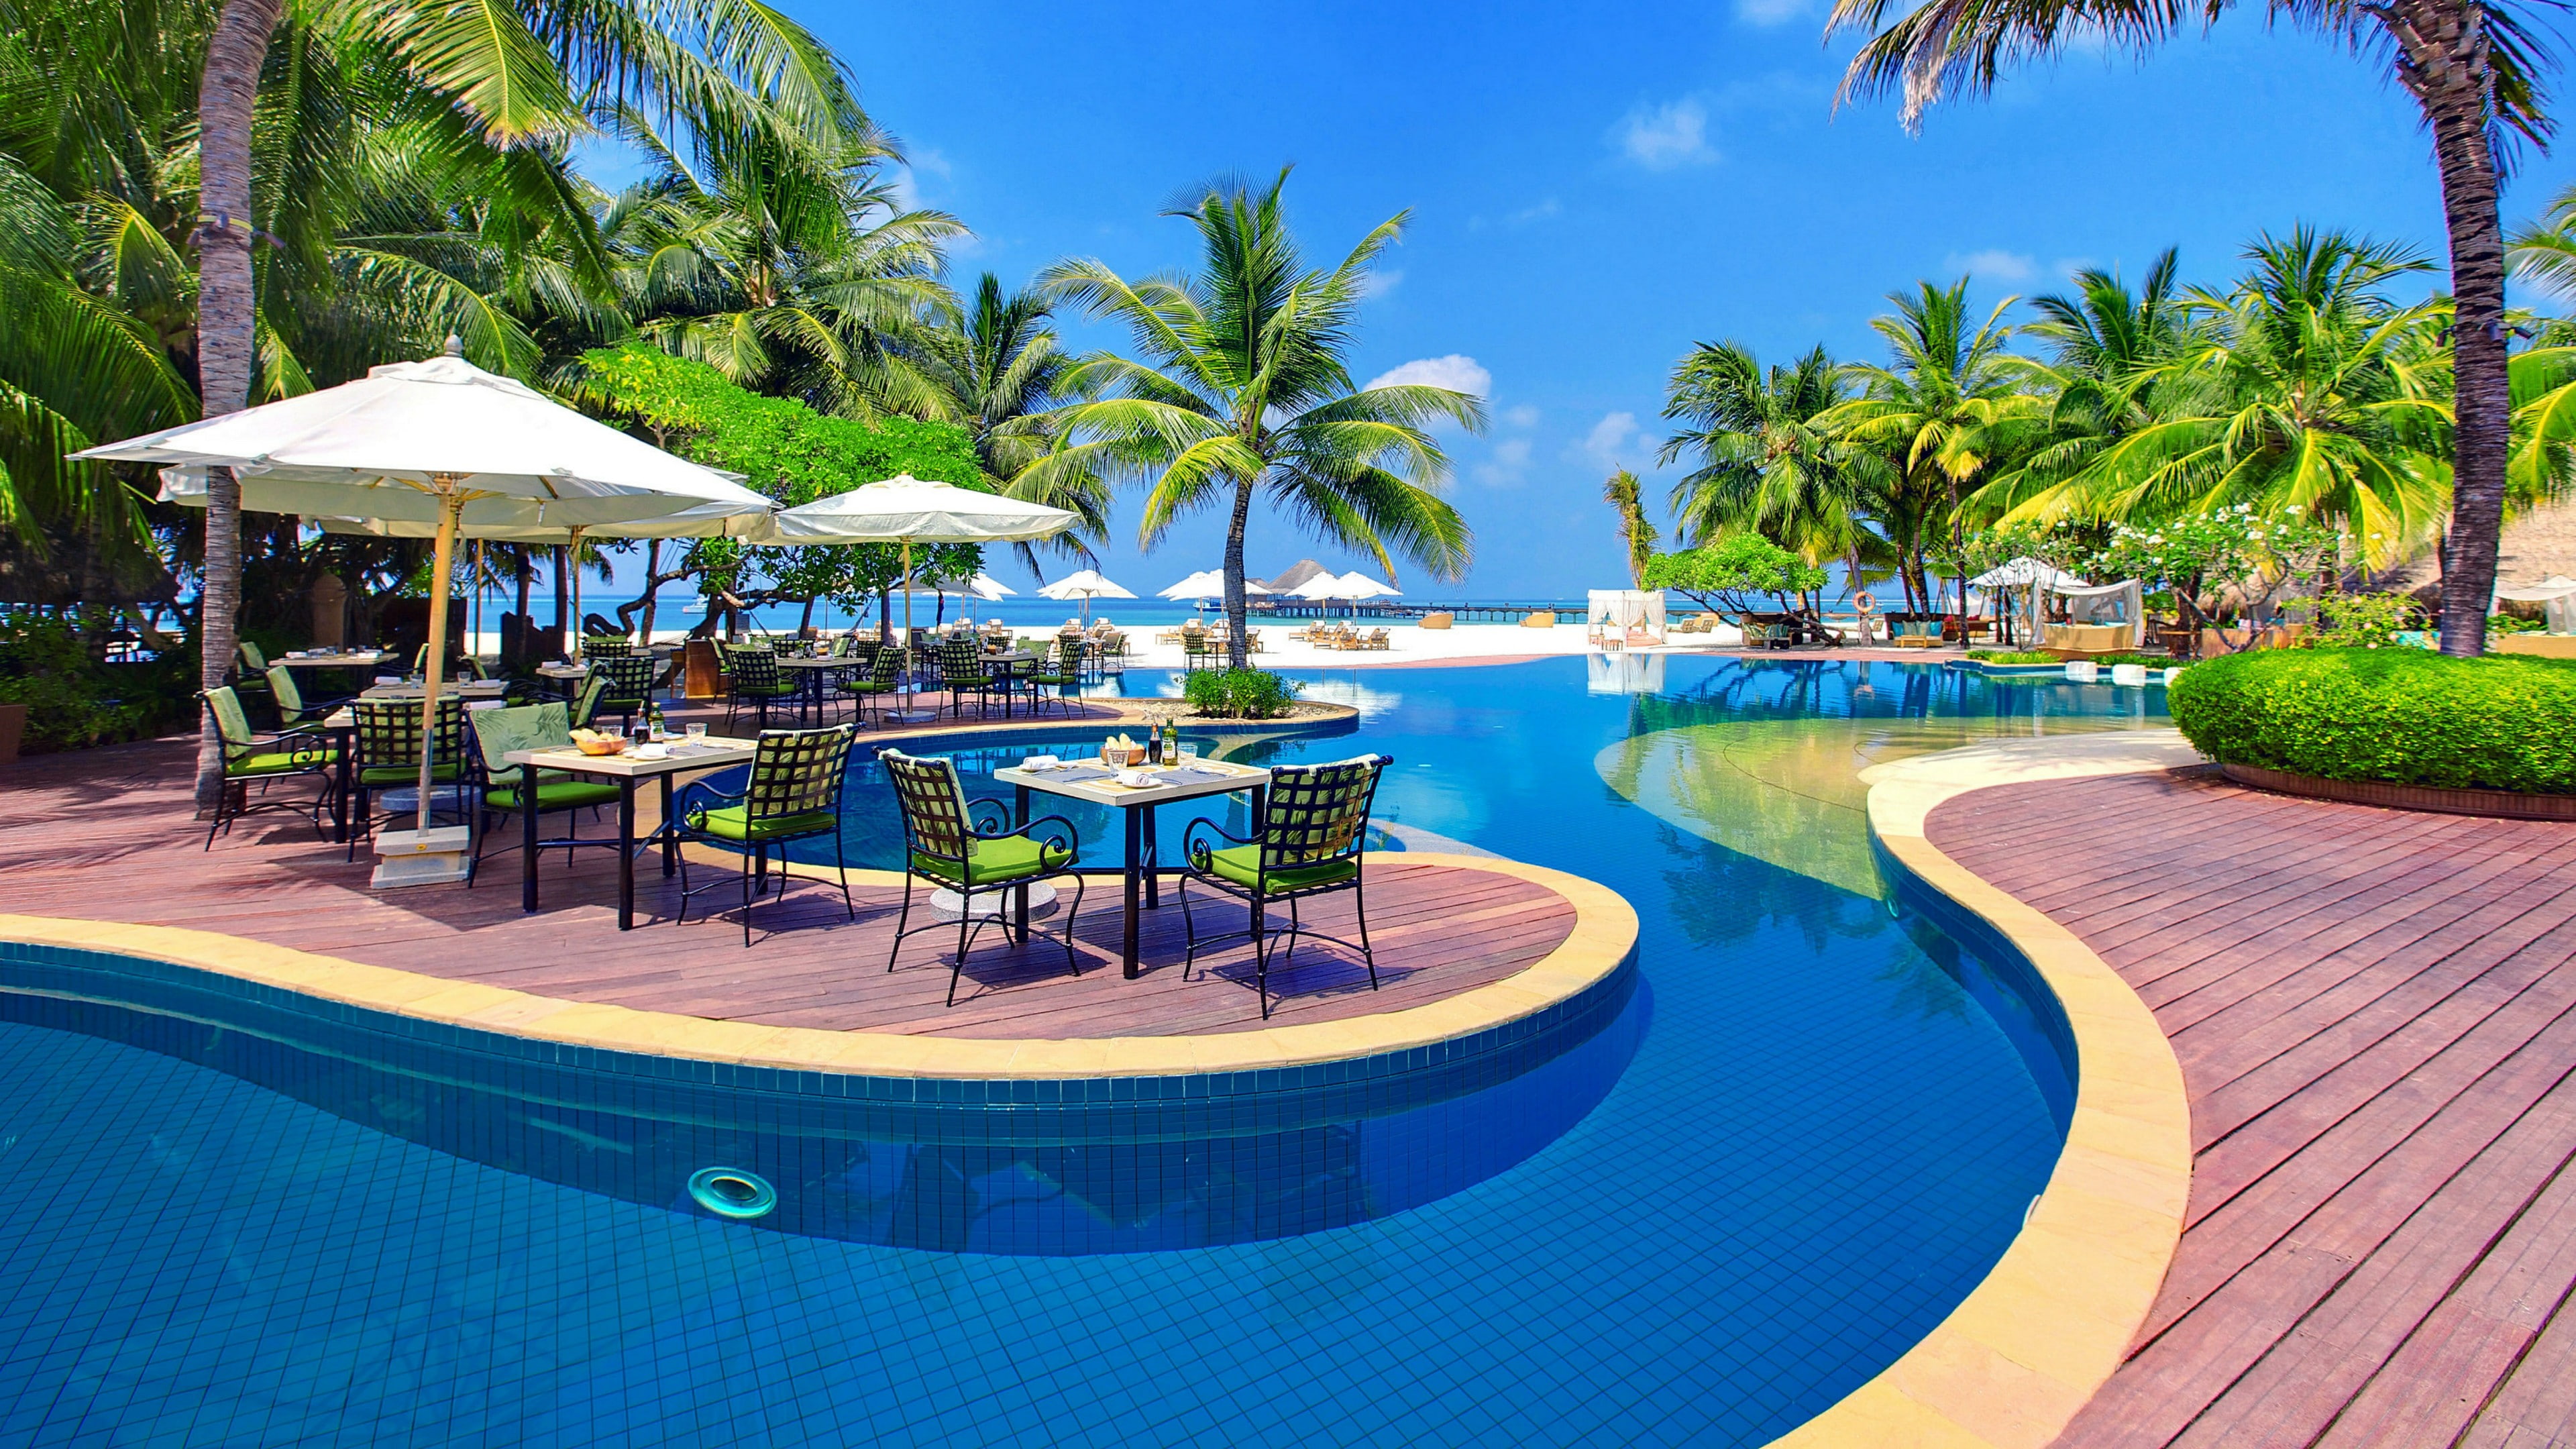 resort, leisure, swimming pool, resort town, vacation, palm tree